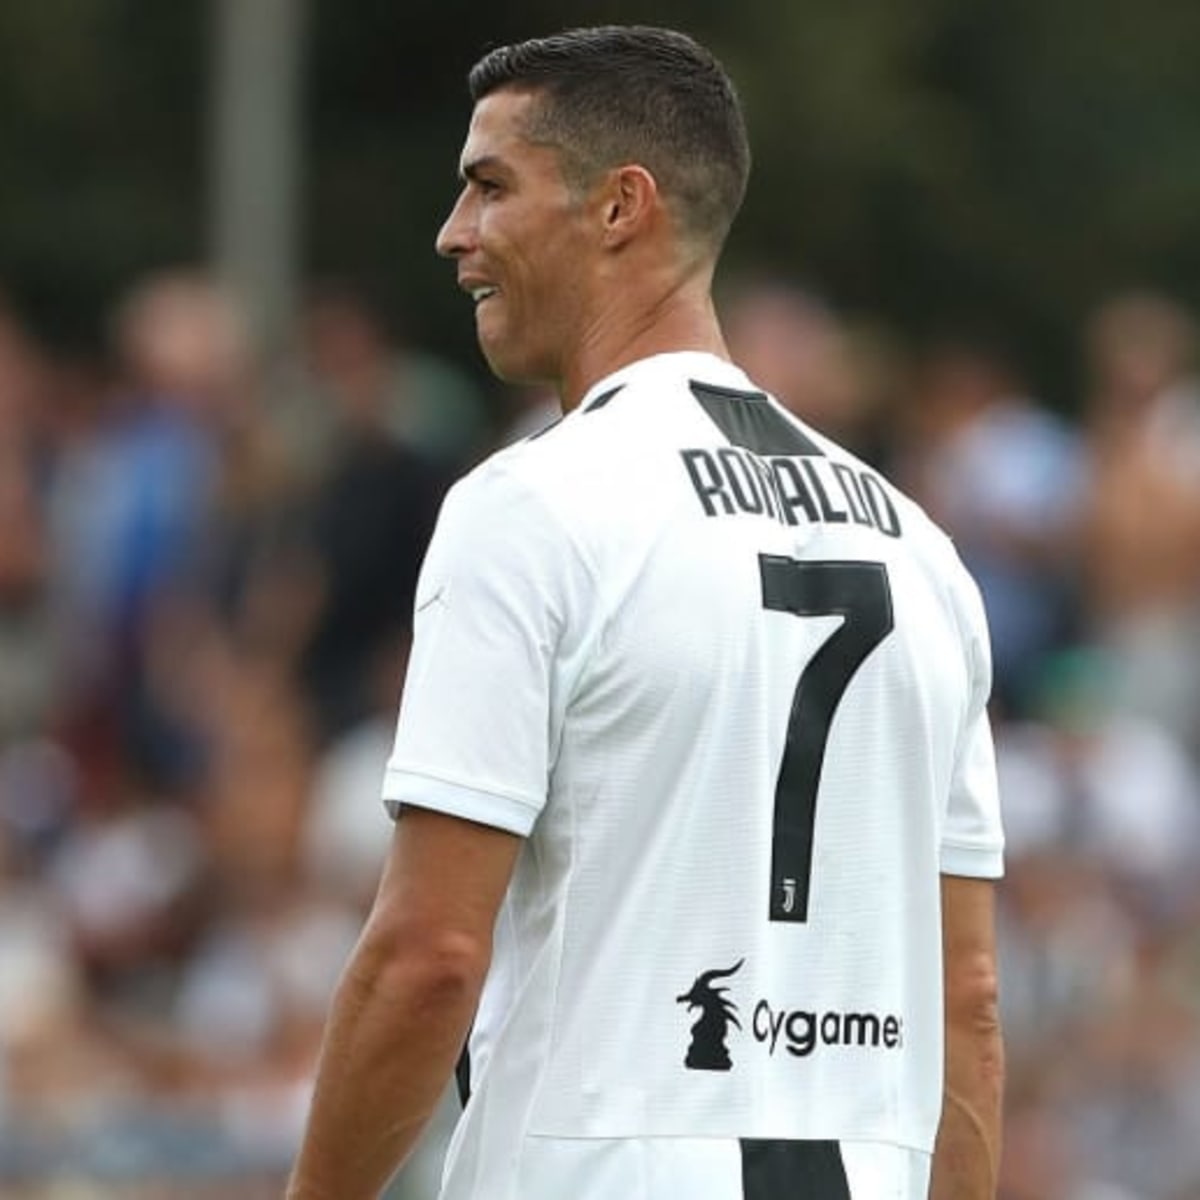 Cristiano Ronaldo's Juventus Jersey Pre-Order